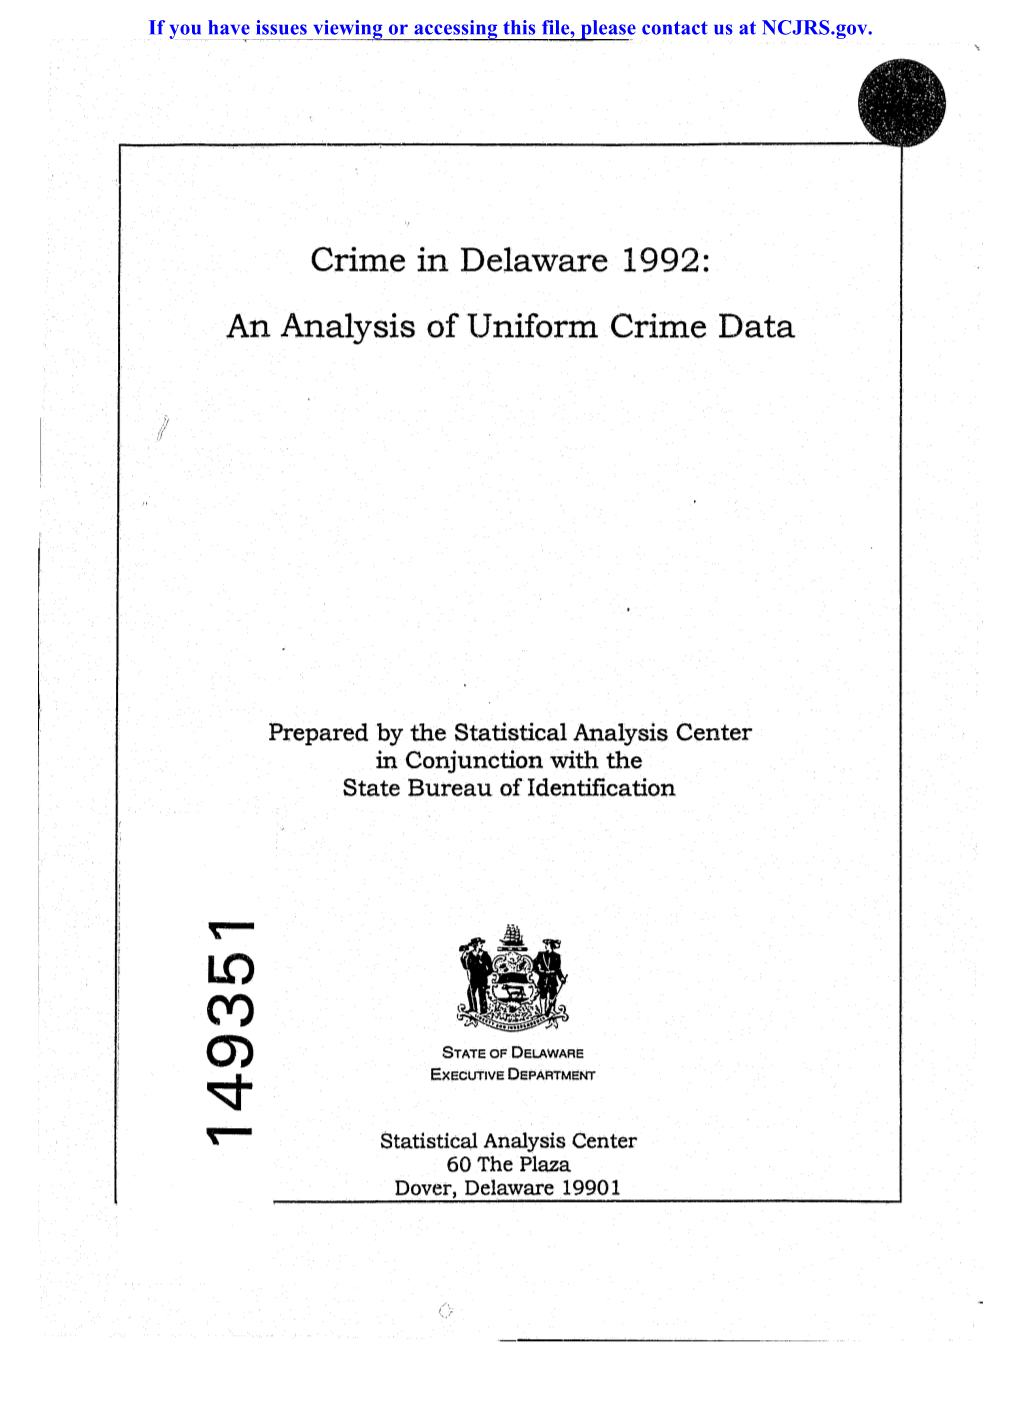 Crime in Delaware 1992: an Analysis of Uniform Crime Data